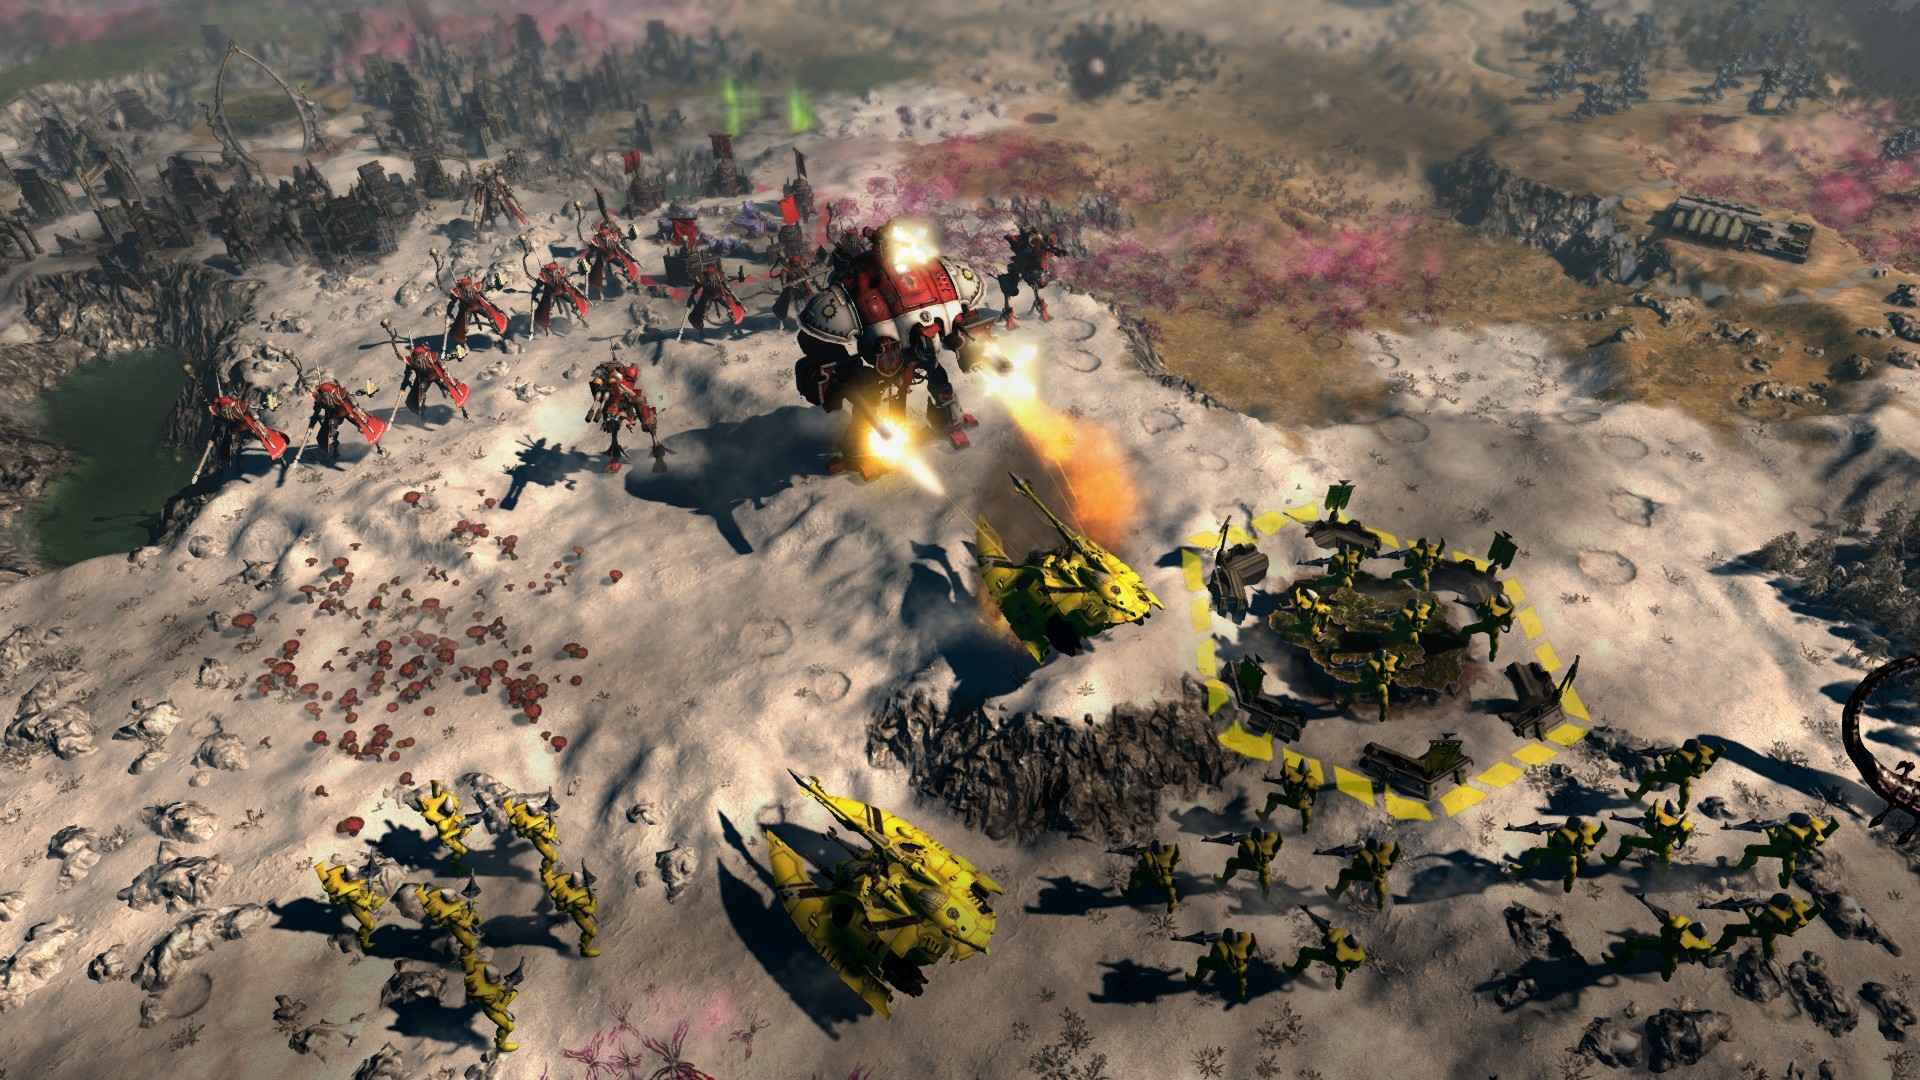 Warhammer 40,000: Gladius - Adepta Sororitas on Steam